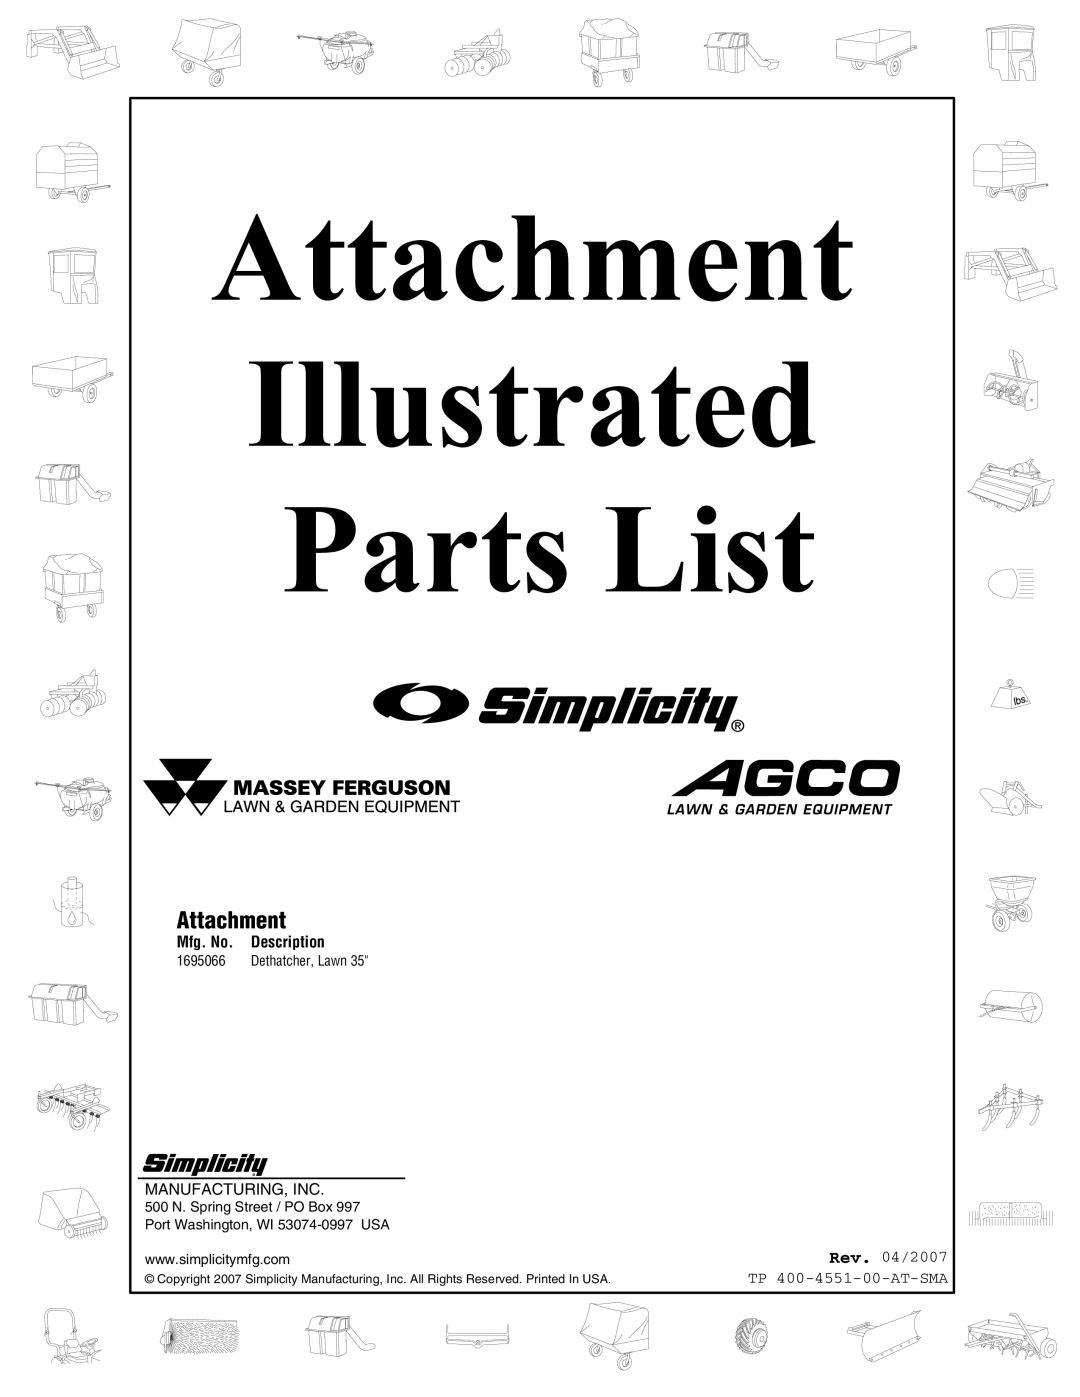 Snapper manual Attachment, Mfg. No, Description, Rev. 04/2007, TP 400-4551-00-AT-SMA, Illustrated, Parts List 